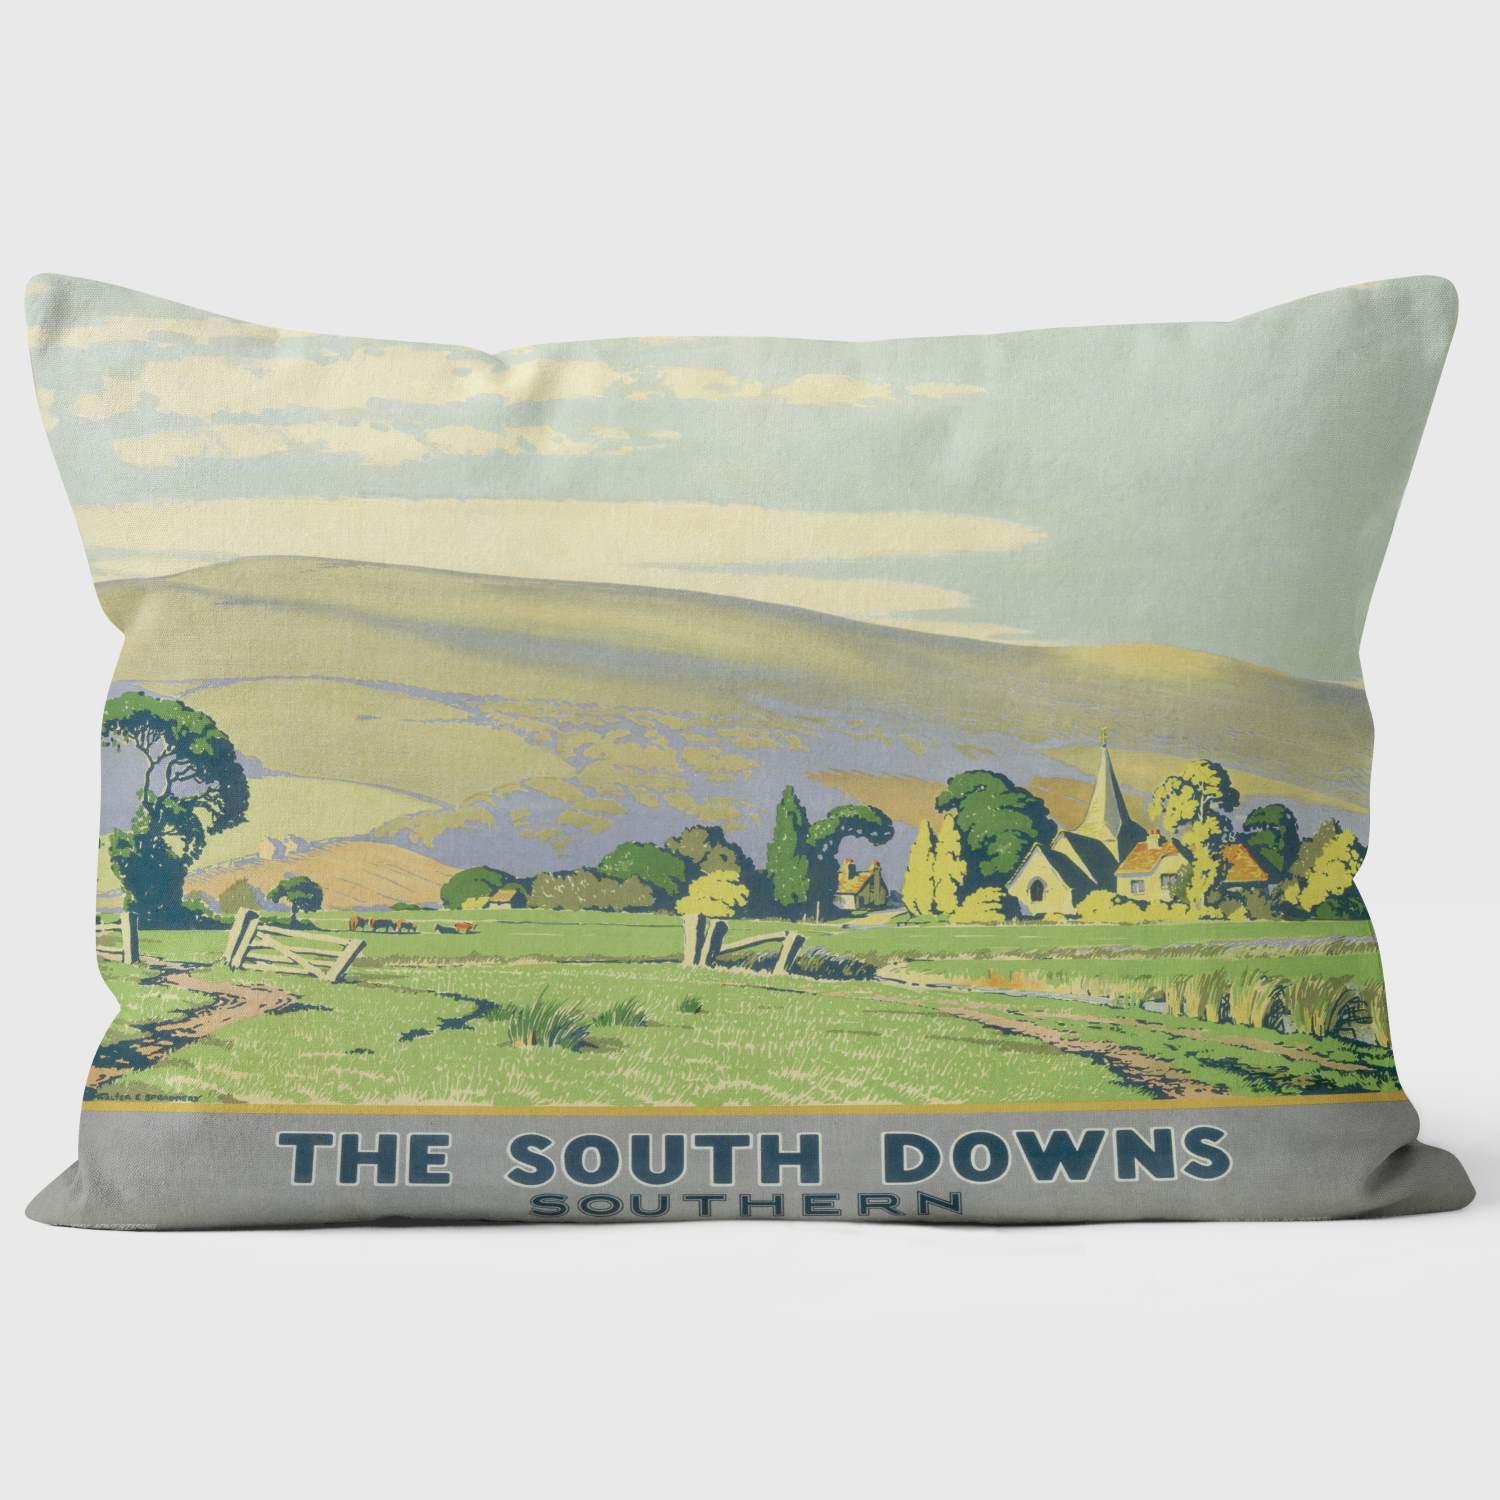 The South Downs. S.R. 1946 - National Railways Museum Cushion - Handmade Cushions UK - WeLoveCushions